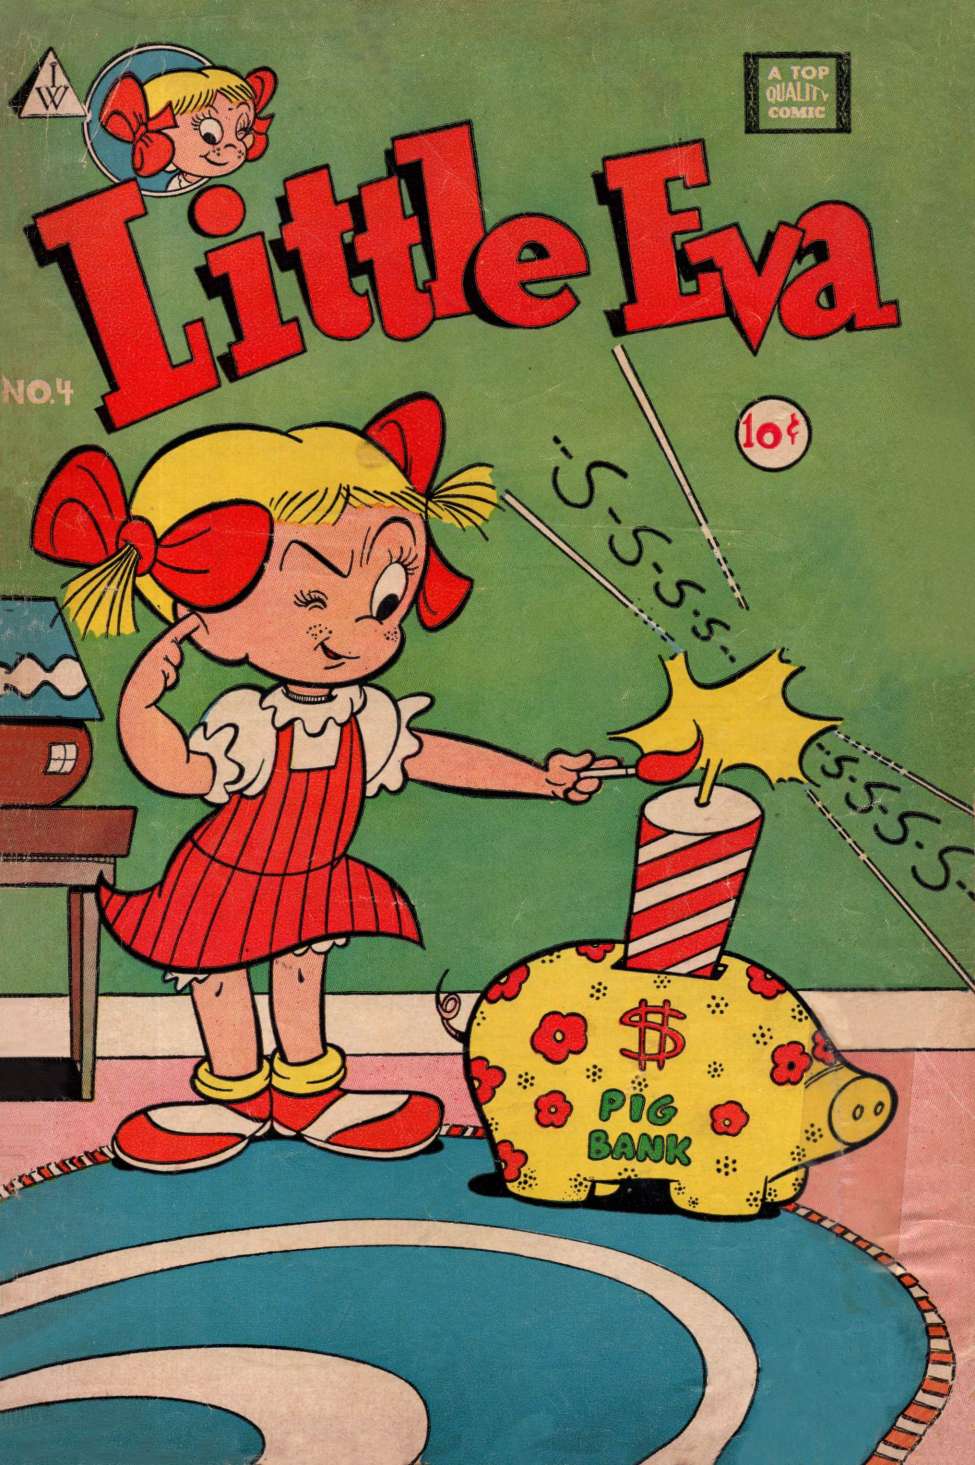 Little Eva 04 (I. W. Publishing / Super Comics)